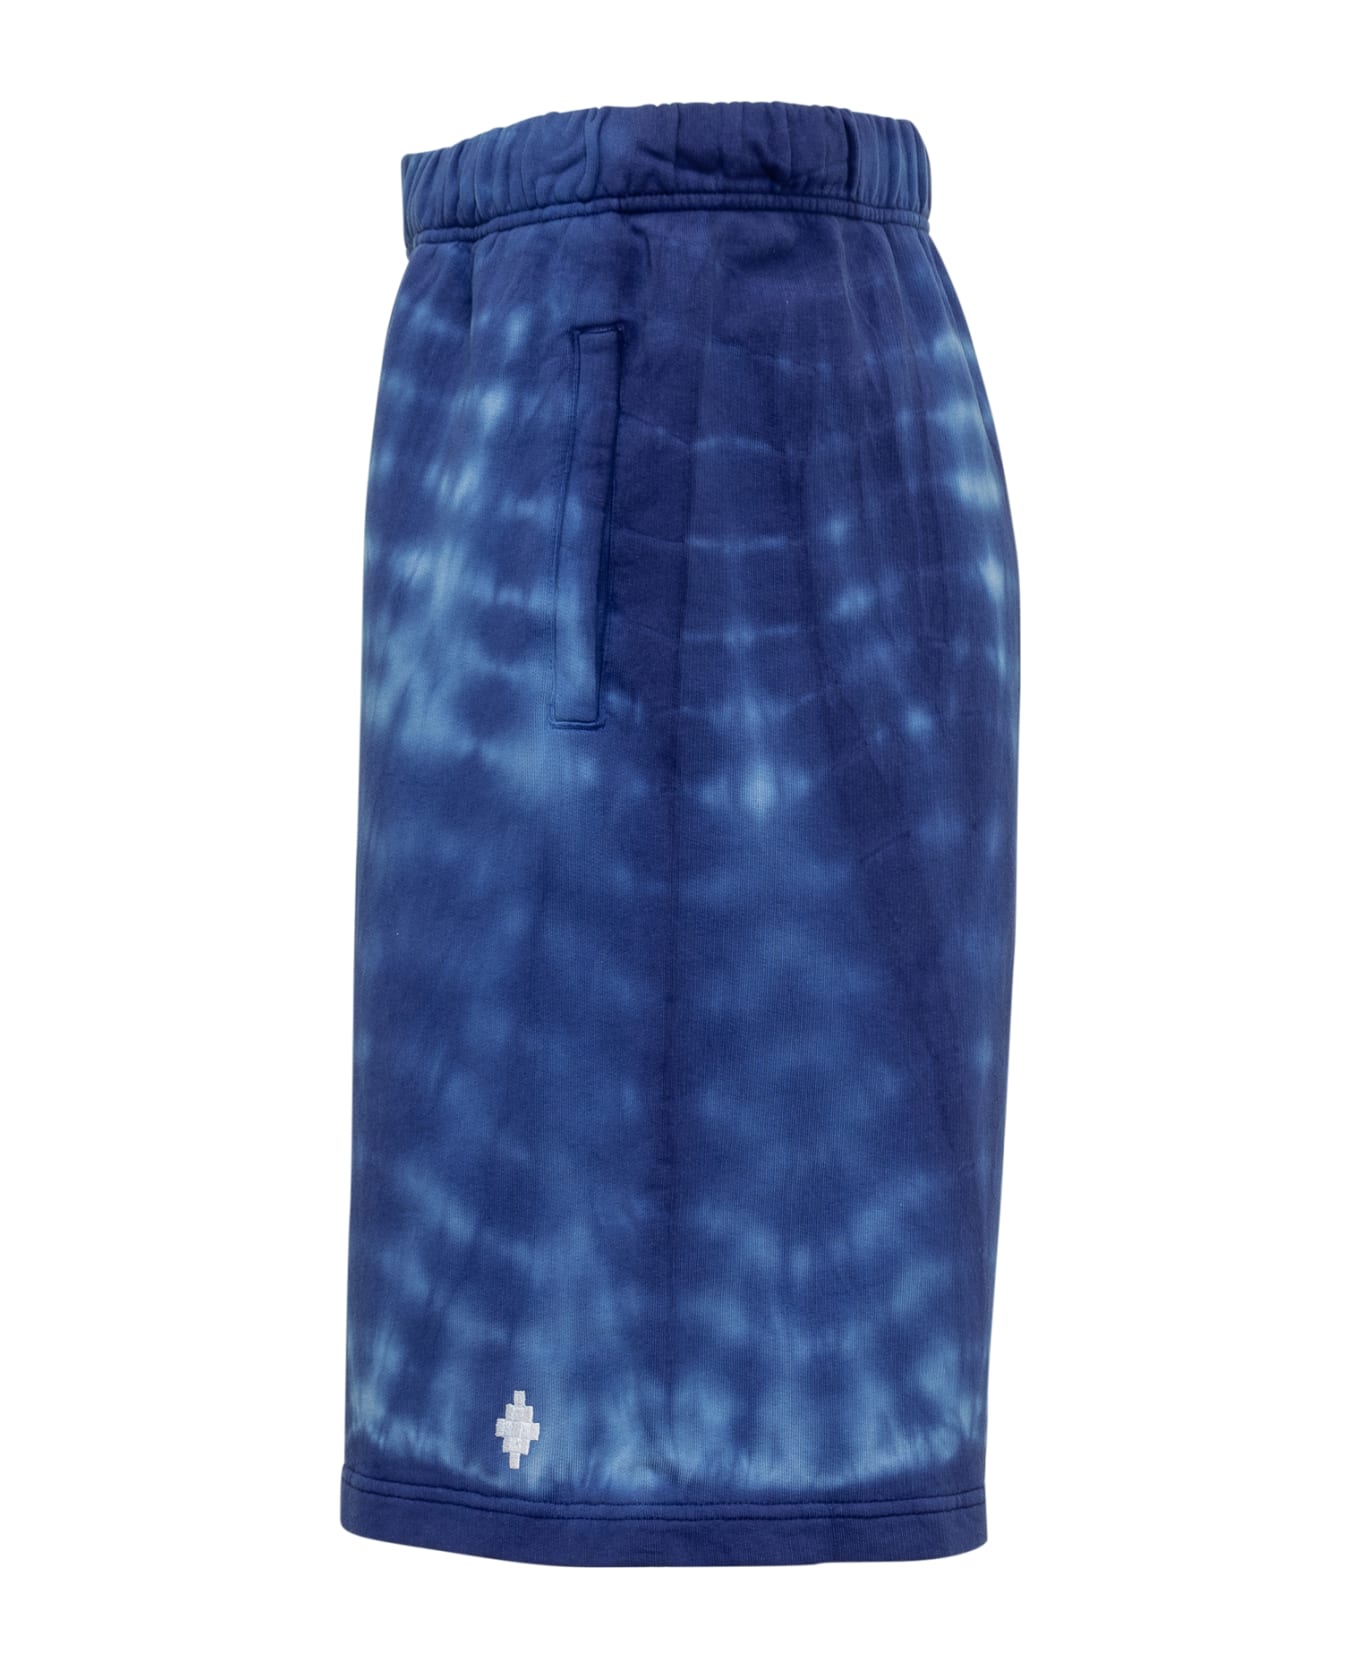 Marcelo Burlon Soundwaves Shorts - BLUE WHITE ショートパンツ